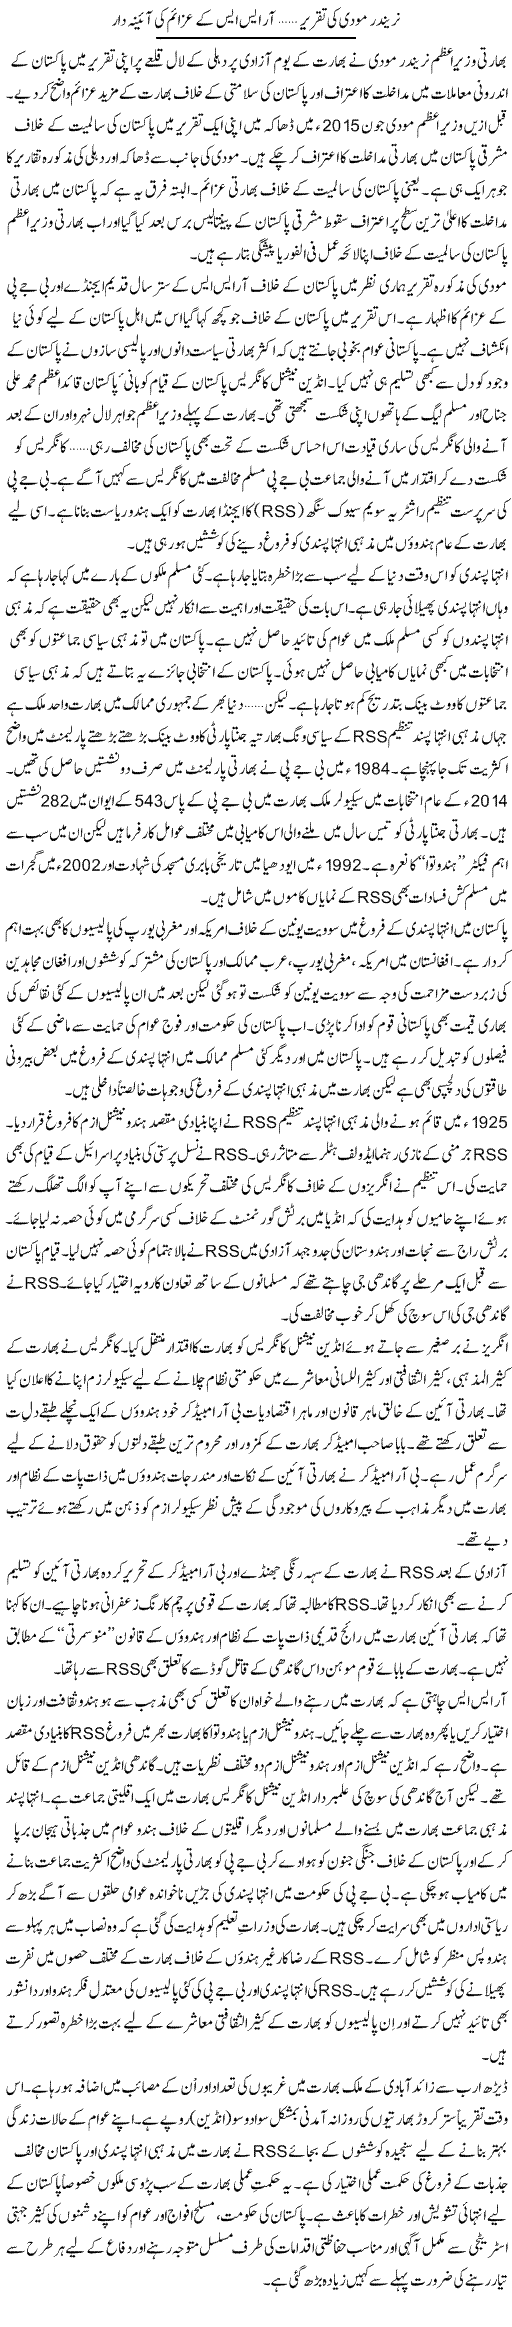 Narendera Modi Ki Taqreer, Rss Ke Azaim Ki Aaina Daar | Dr. Waqar Yousuf Azeemi | Daily Urdu Columns